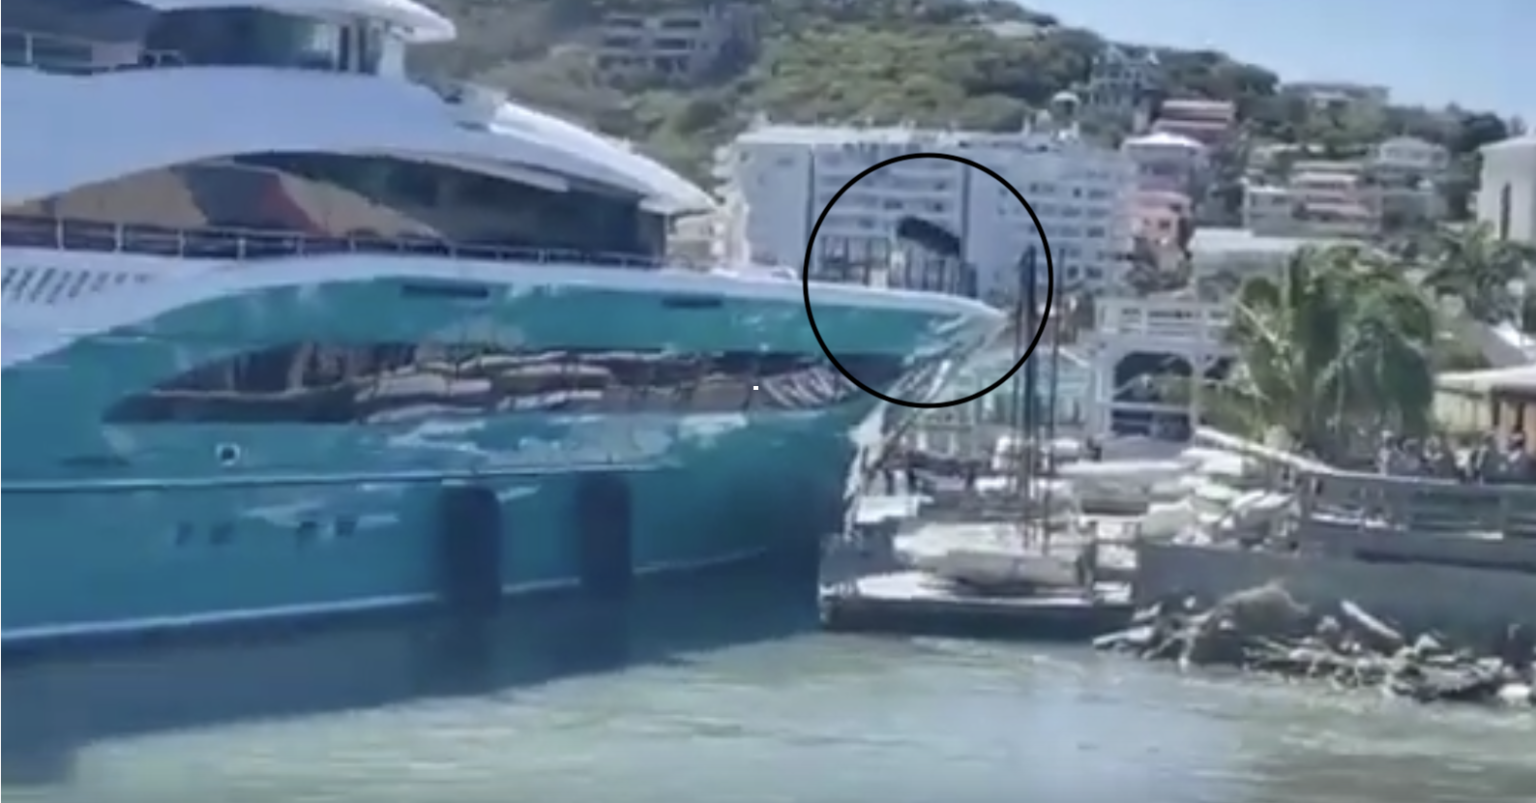 farfalla yacht accident